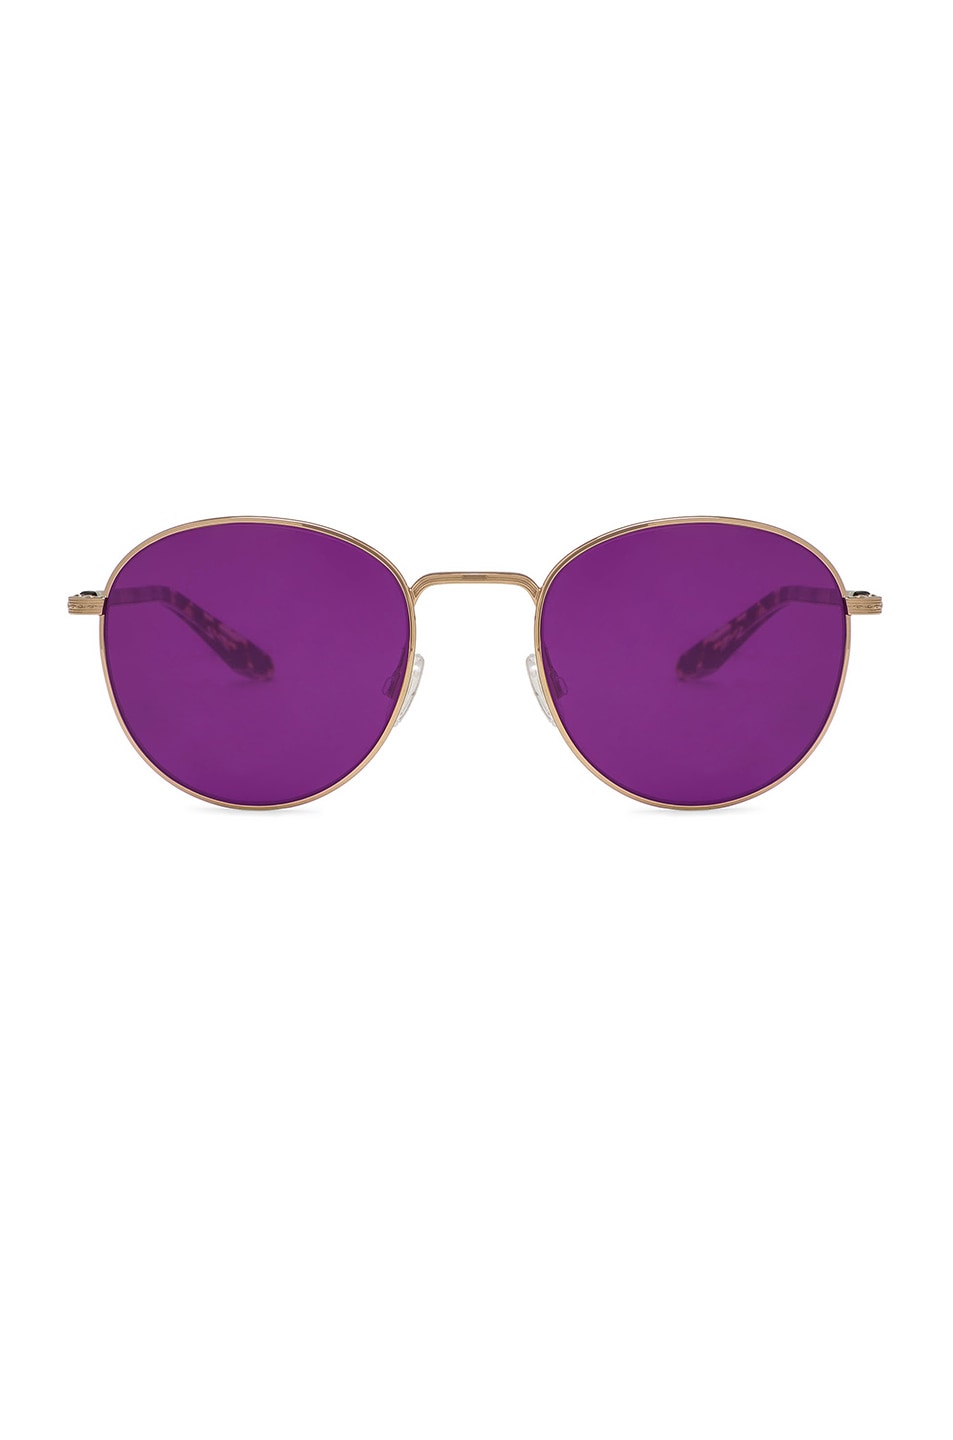 Image 1 of Barton Perreira Tudor Sunglasses in Gold, Crystal & Heroine Chic Custom Purple Amethyst Lenses